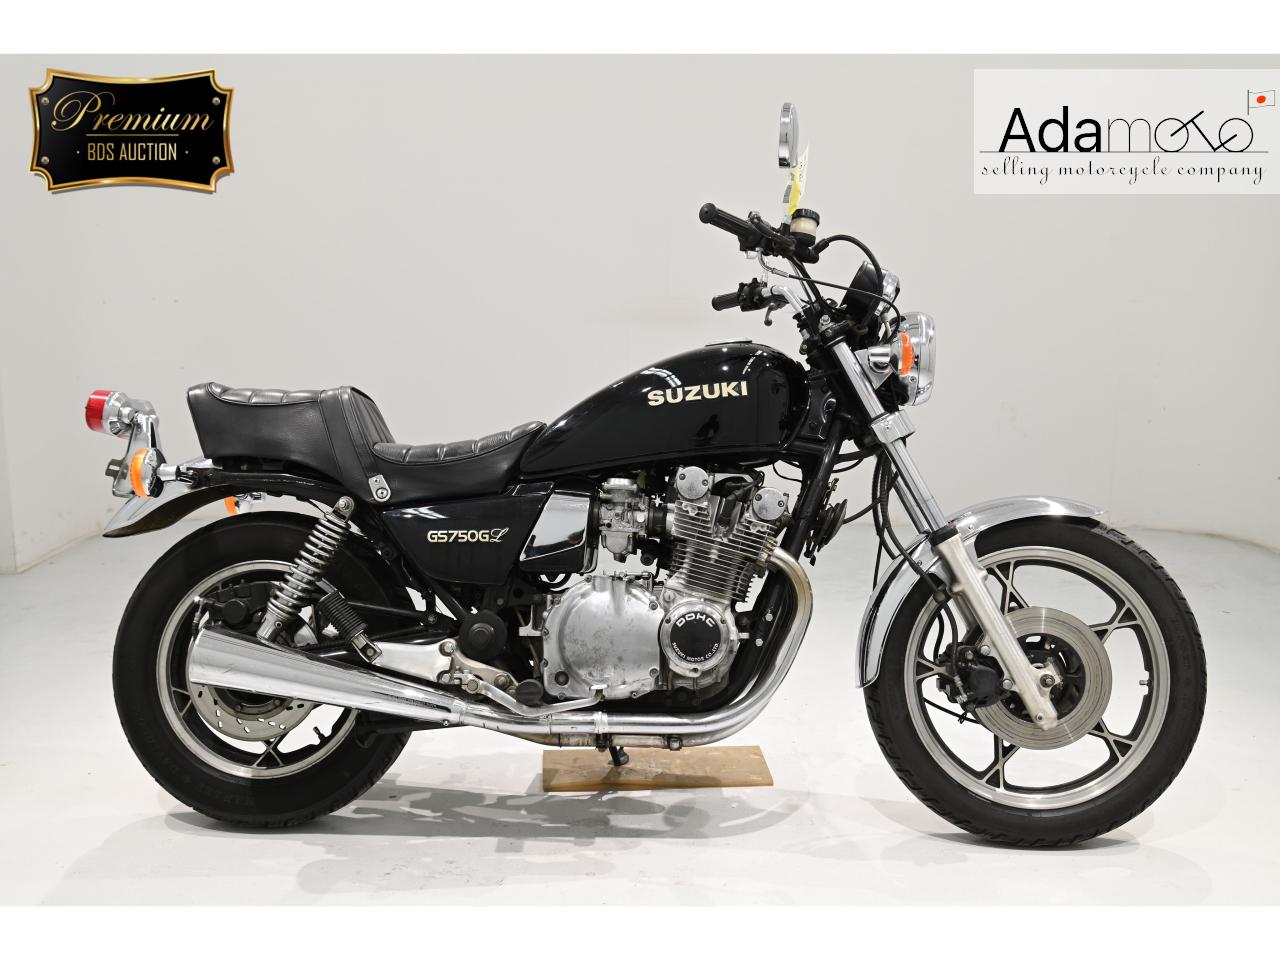 Suzuki GS750GL - Adamoto - Motorcycles from Japan